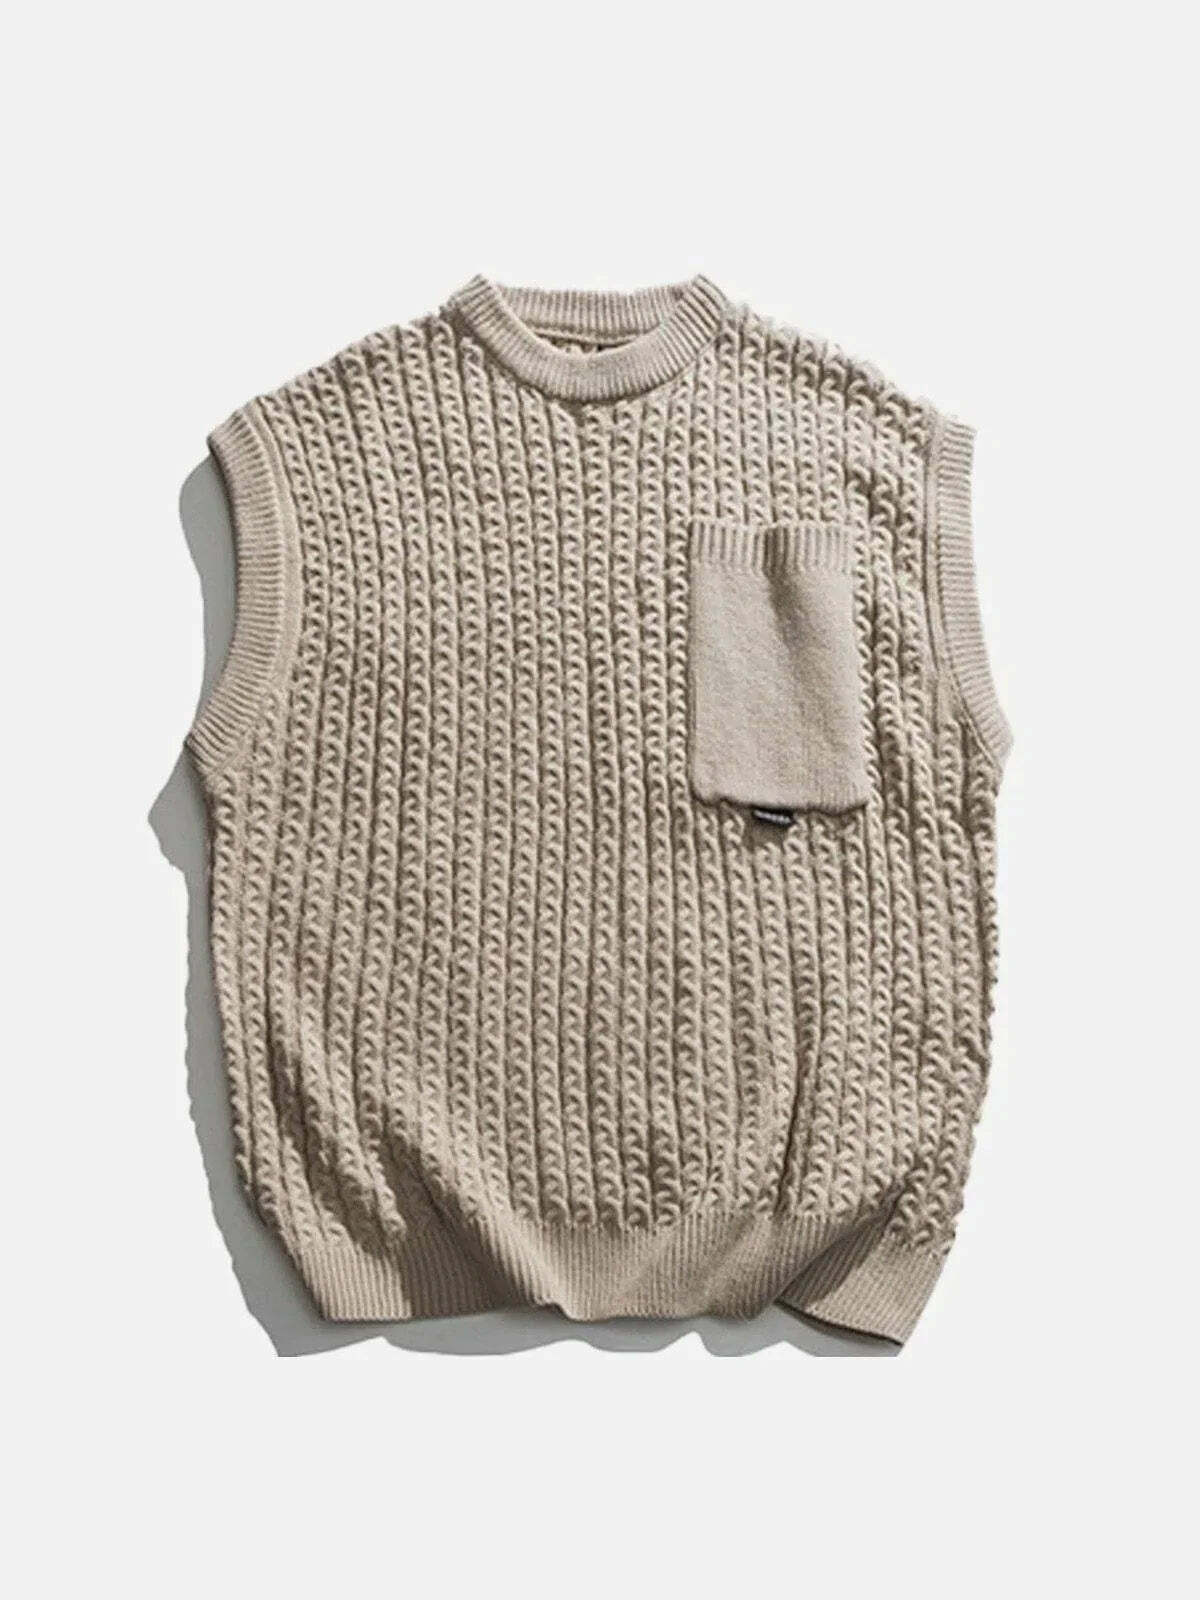 simple sweater vest minimalist & versatile style 6767